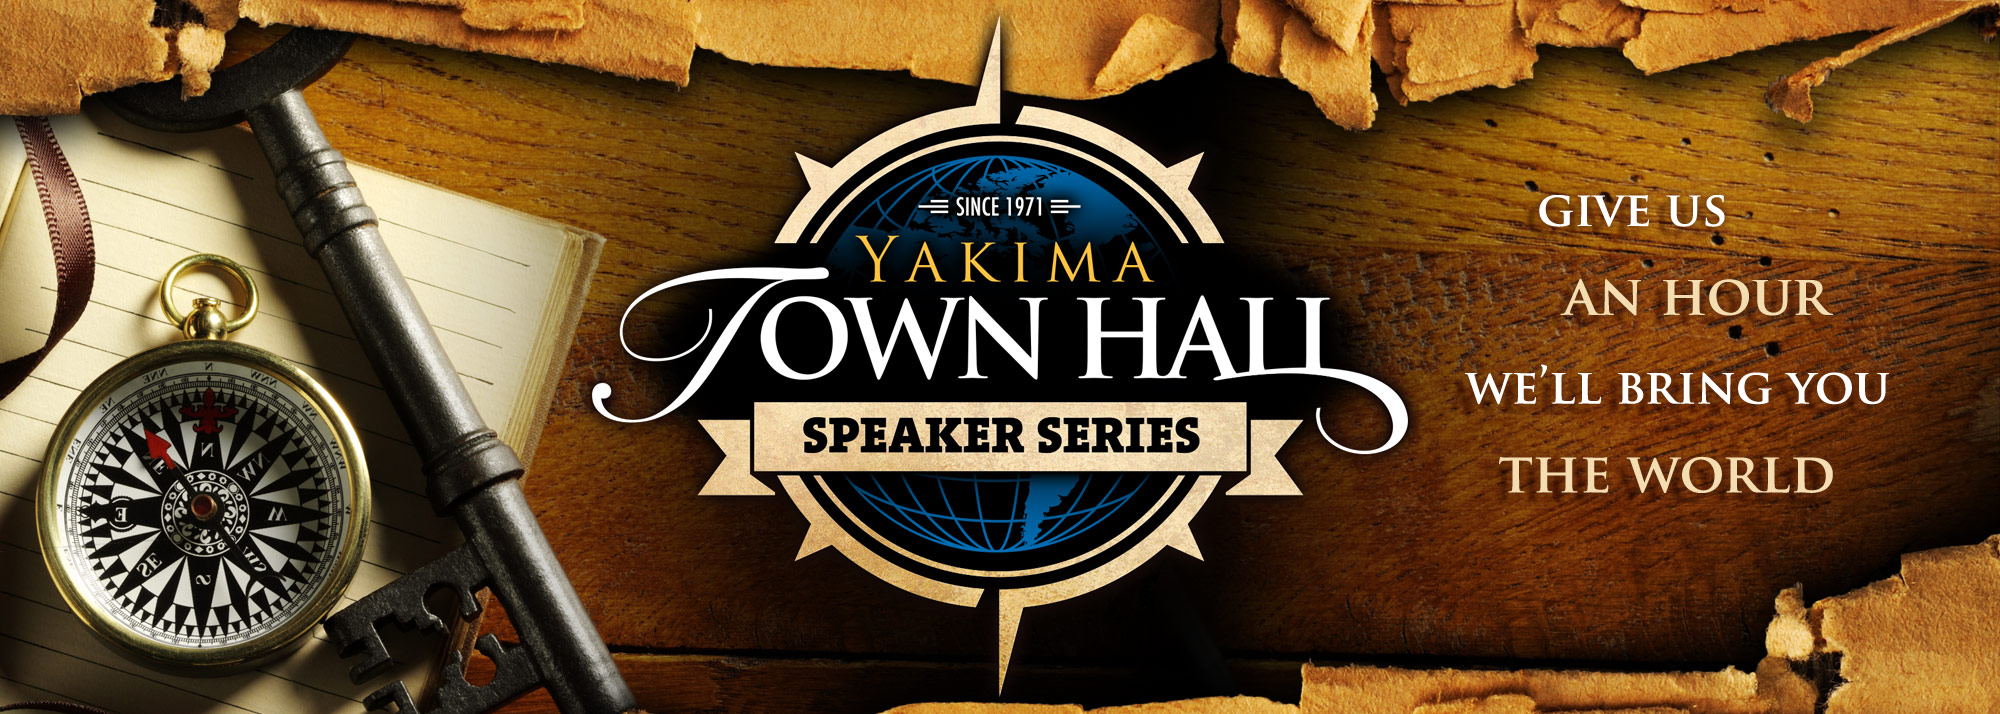 Yakima Town Hall